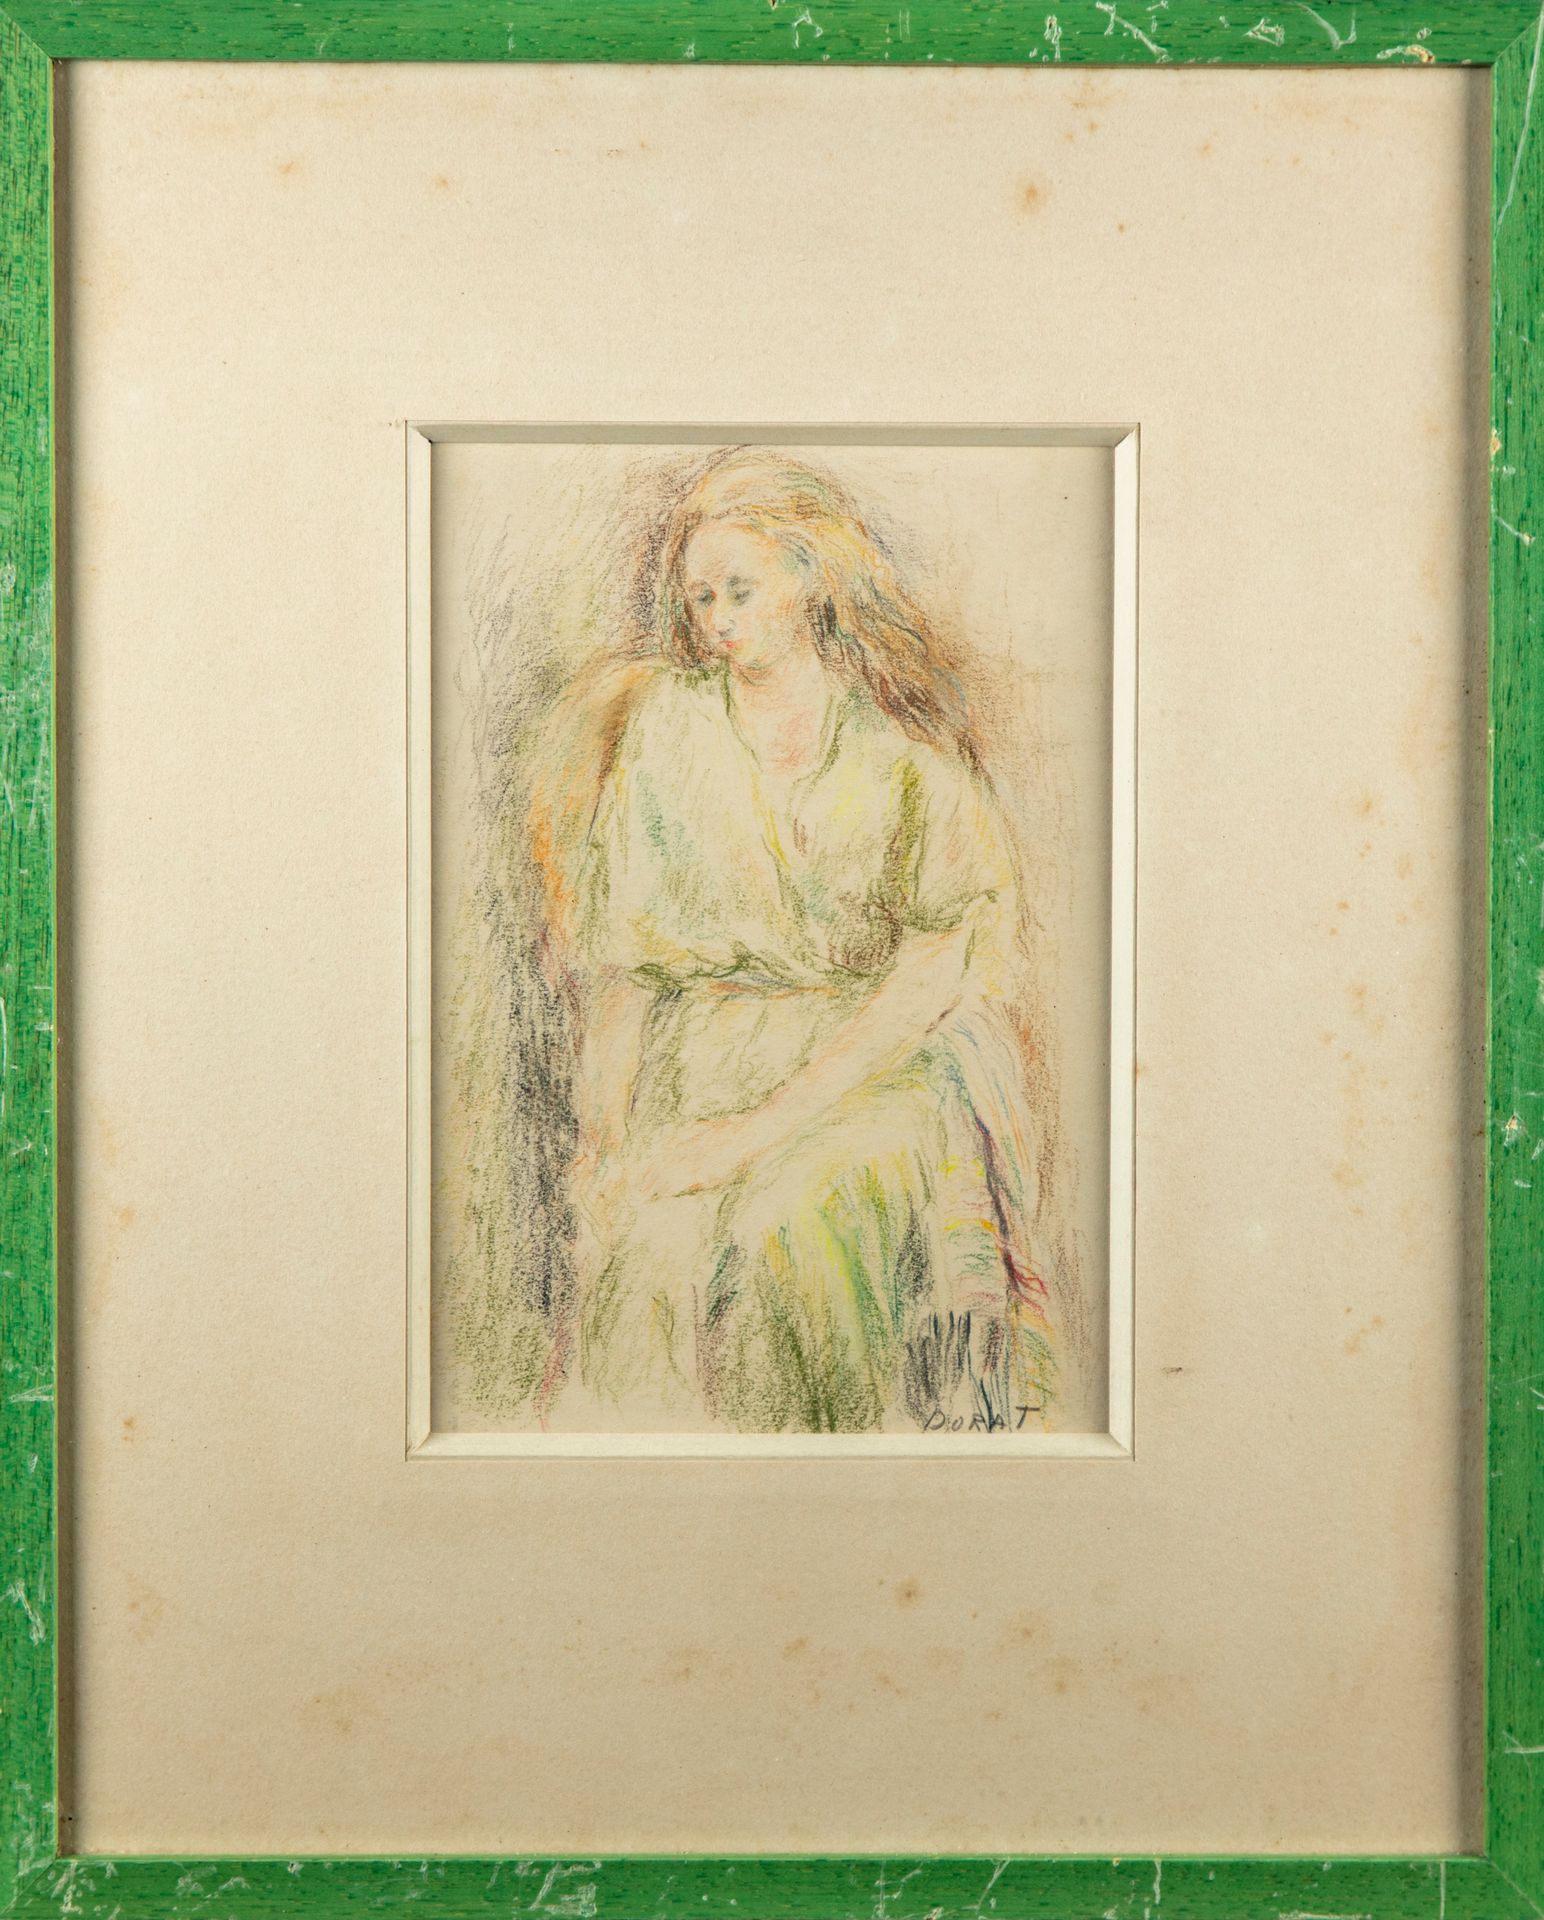 DORAT-IBELS Charlotte DORAT-IBELS (1904 -?)

Portrait de femme à la robe verte

&hellip;